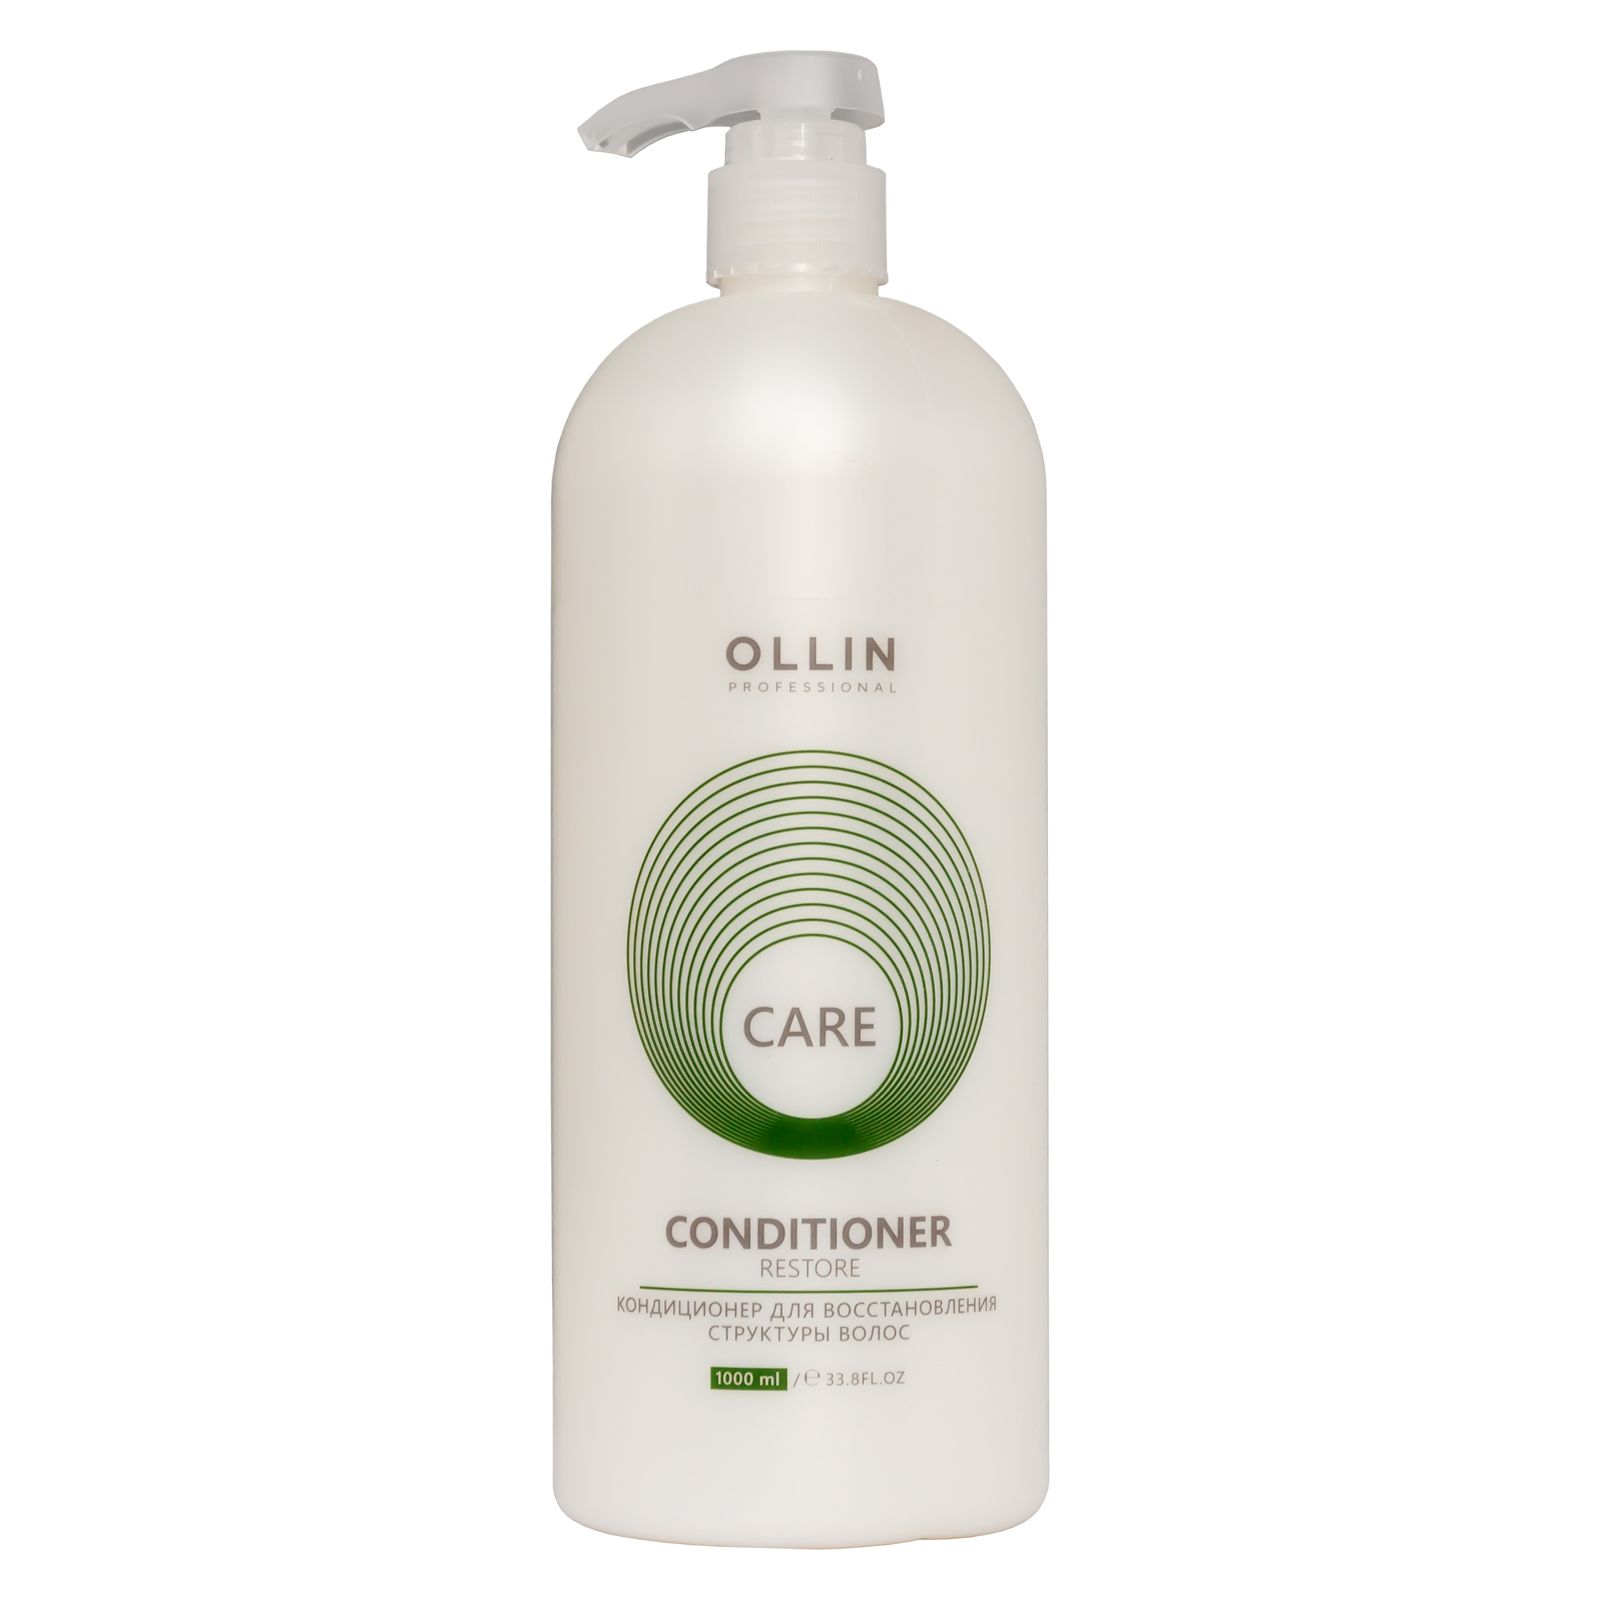 Кондиционер для роста волос. Ollin Care restore Shampoo. Оллин бальзам увлажняющий 1000мл. Ollin Care шампунь увлажняющий 1000мл. Ollin Care restore Conditioner.